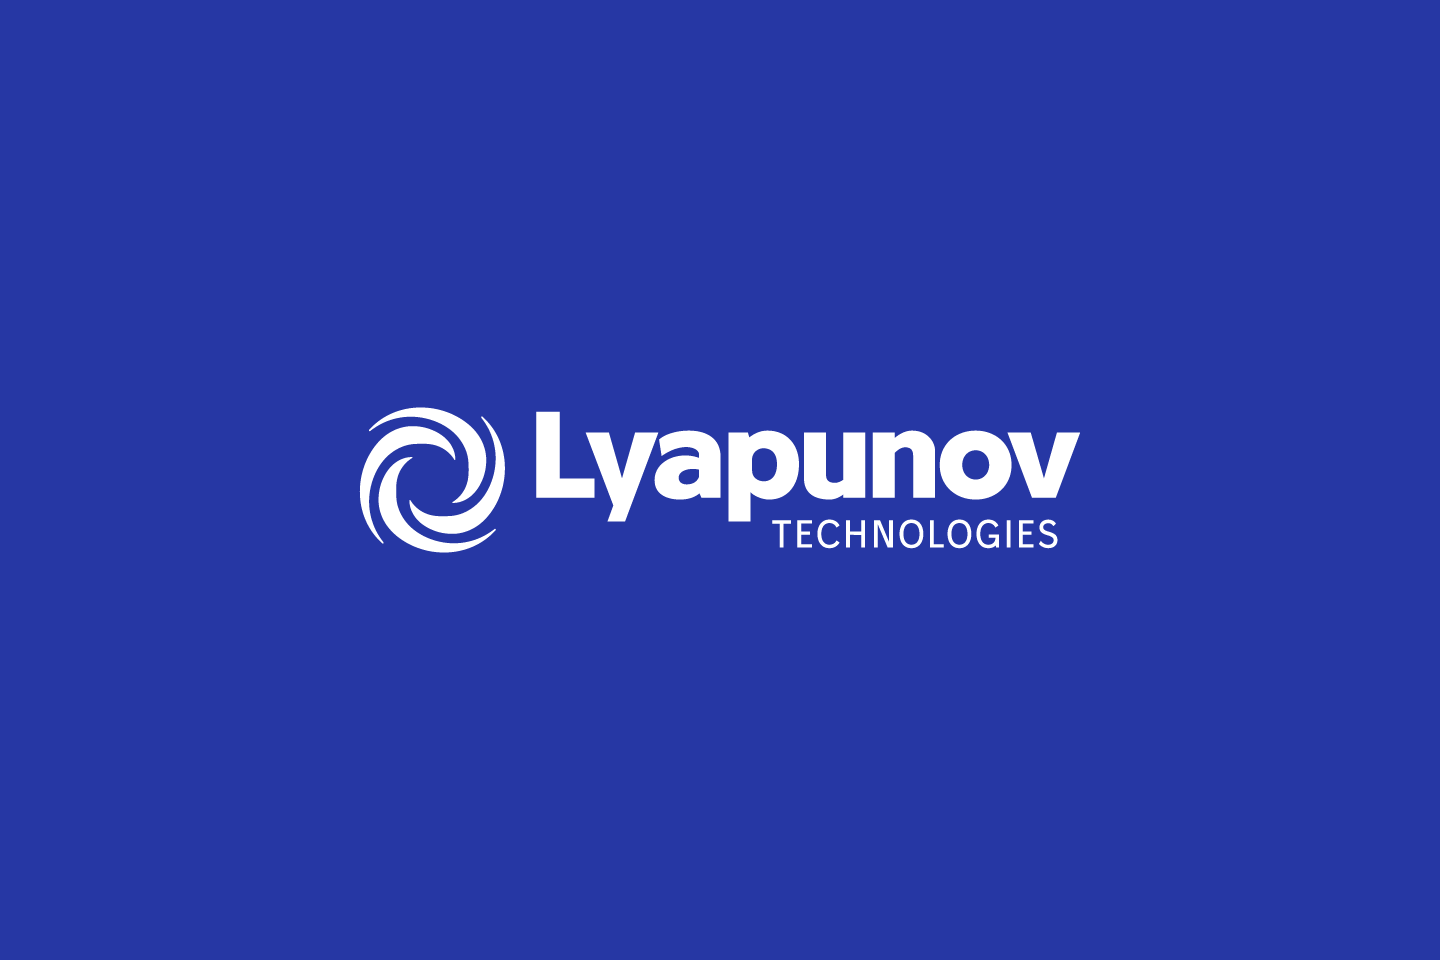 Lyapunov Technologies logo